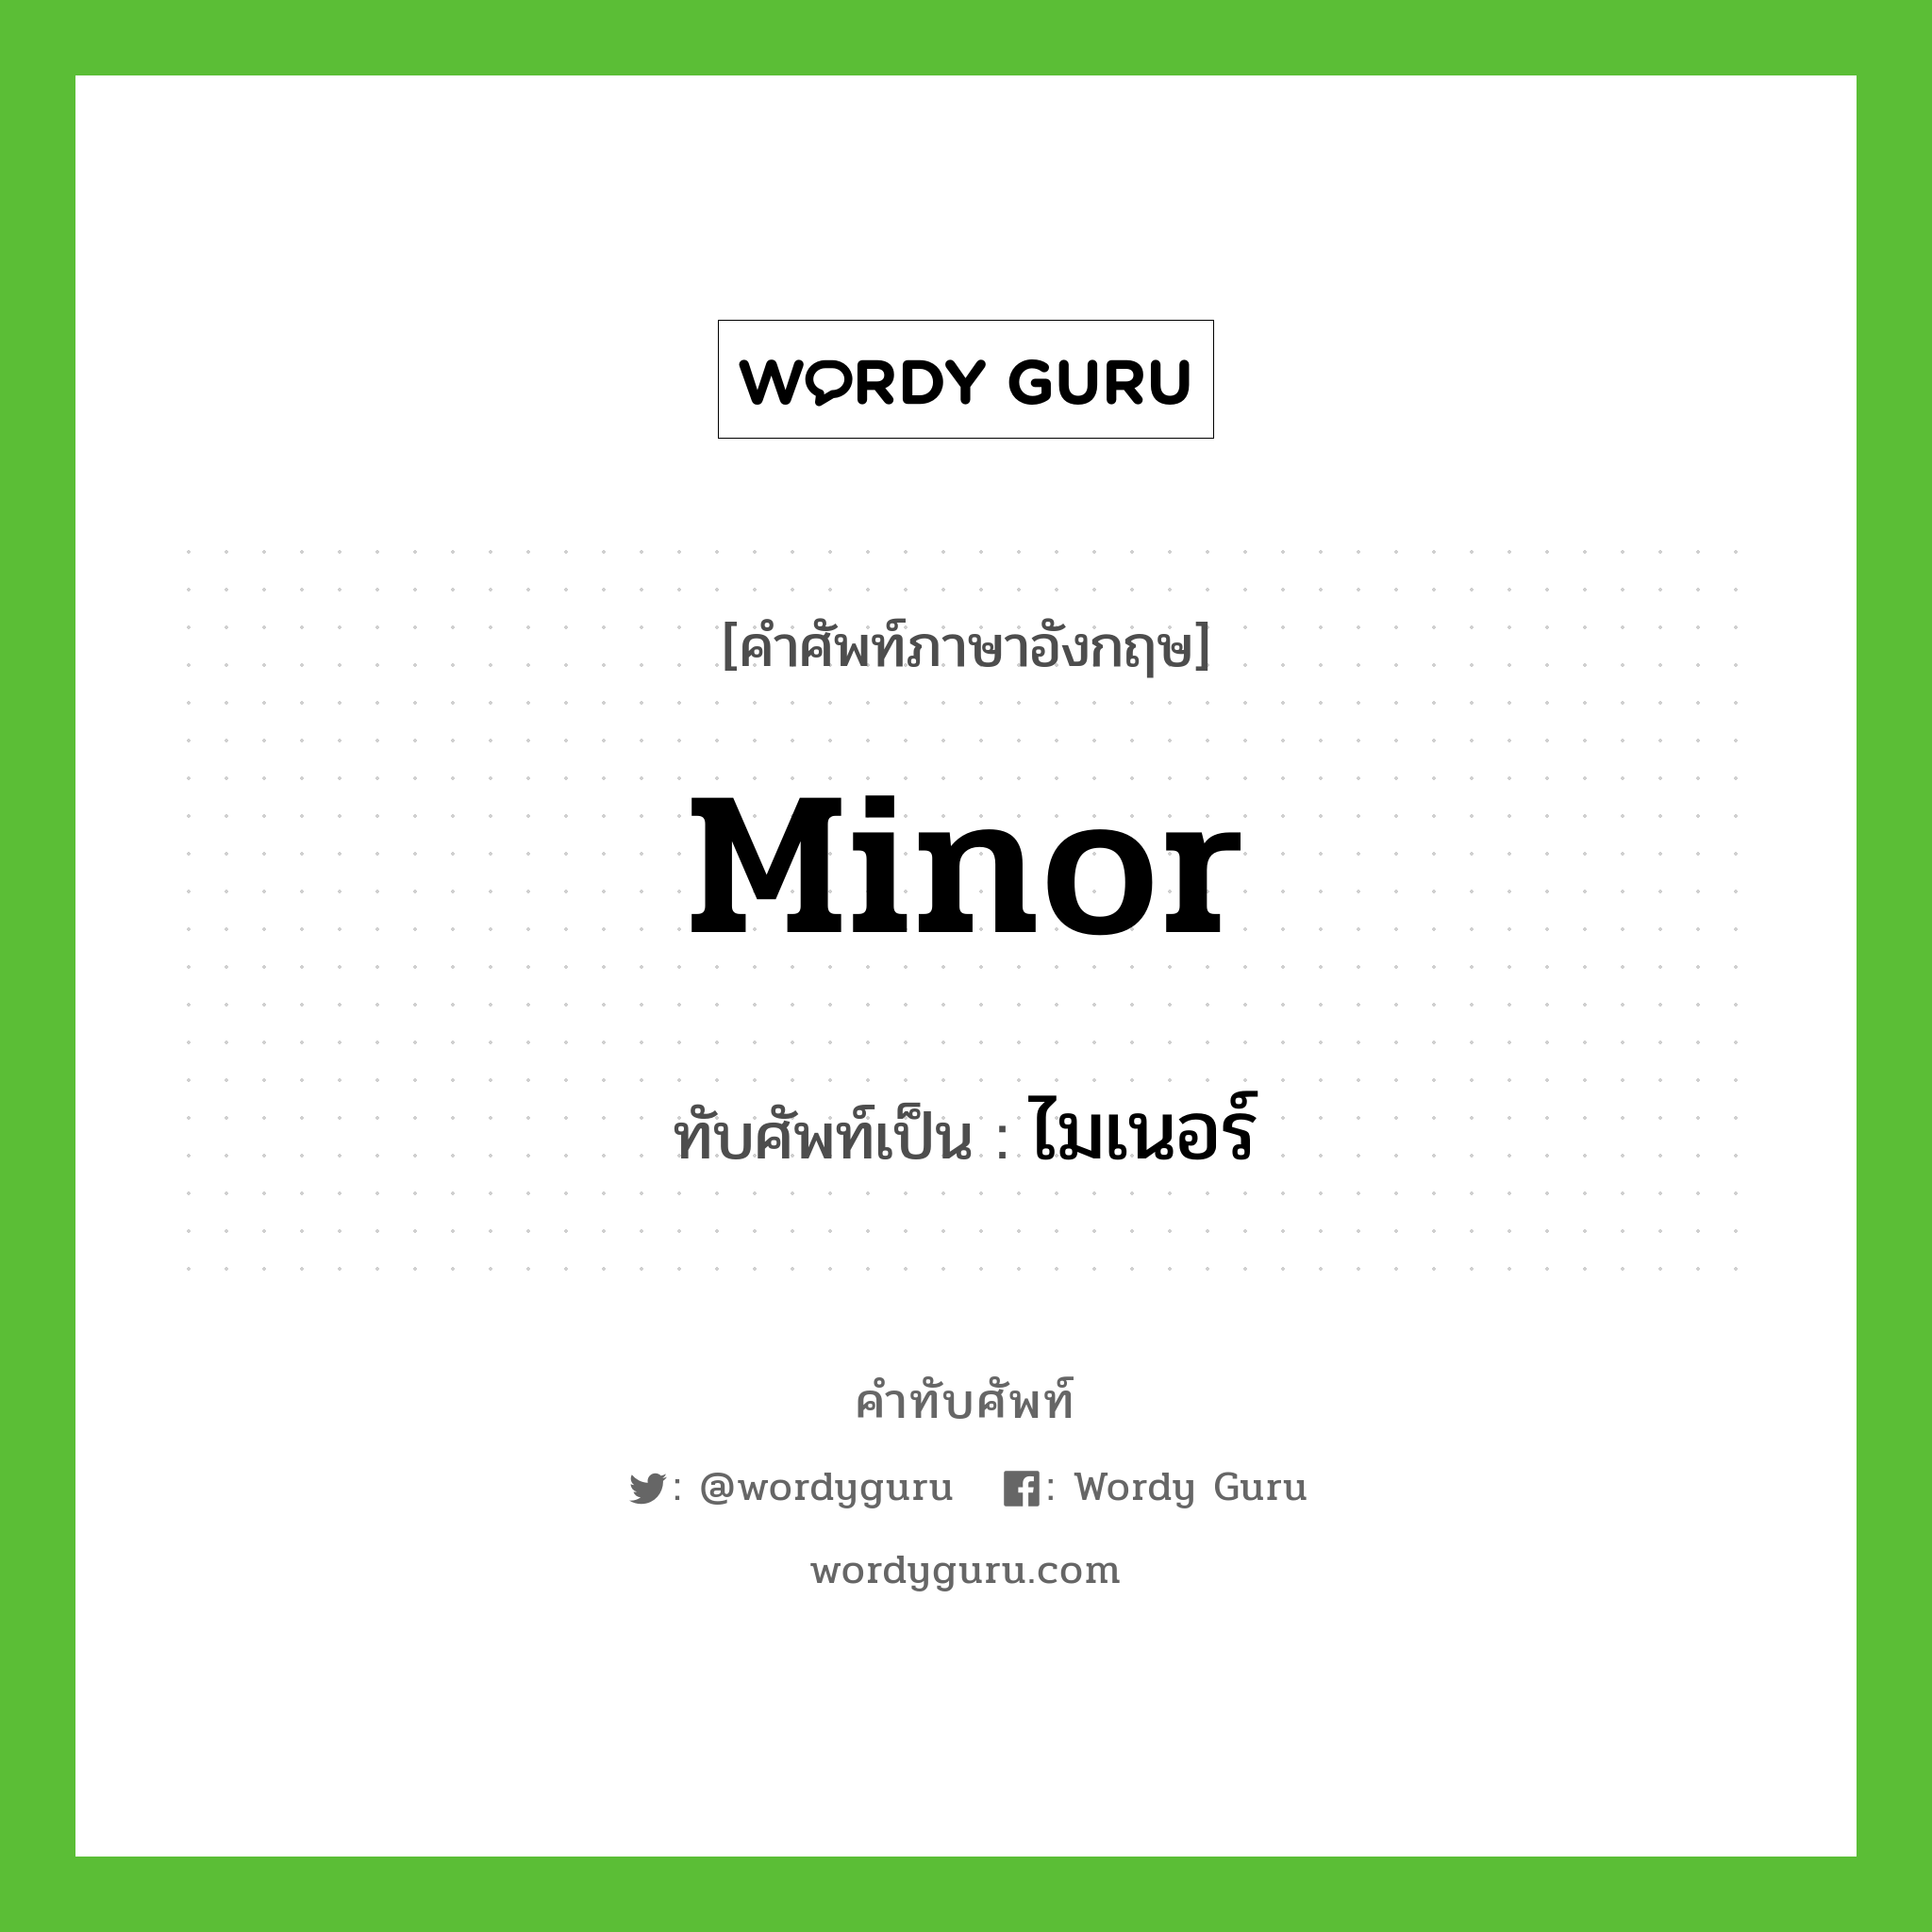 Minor เขียนเป็นคำไทยว่าอะไร? | Wordy Guru